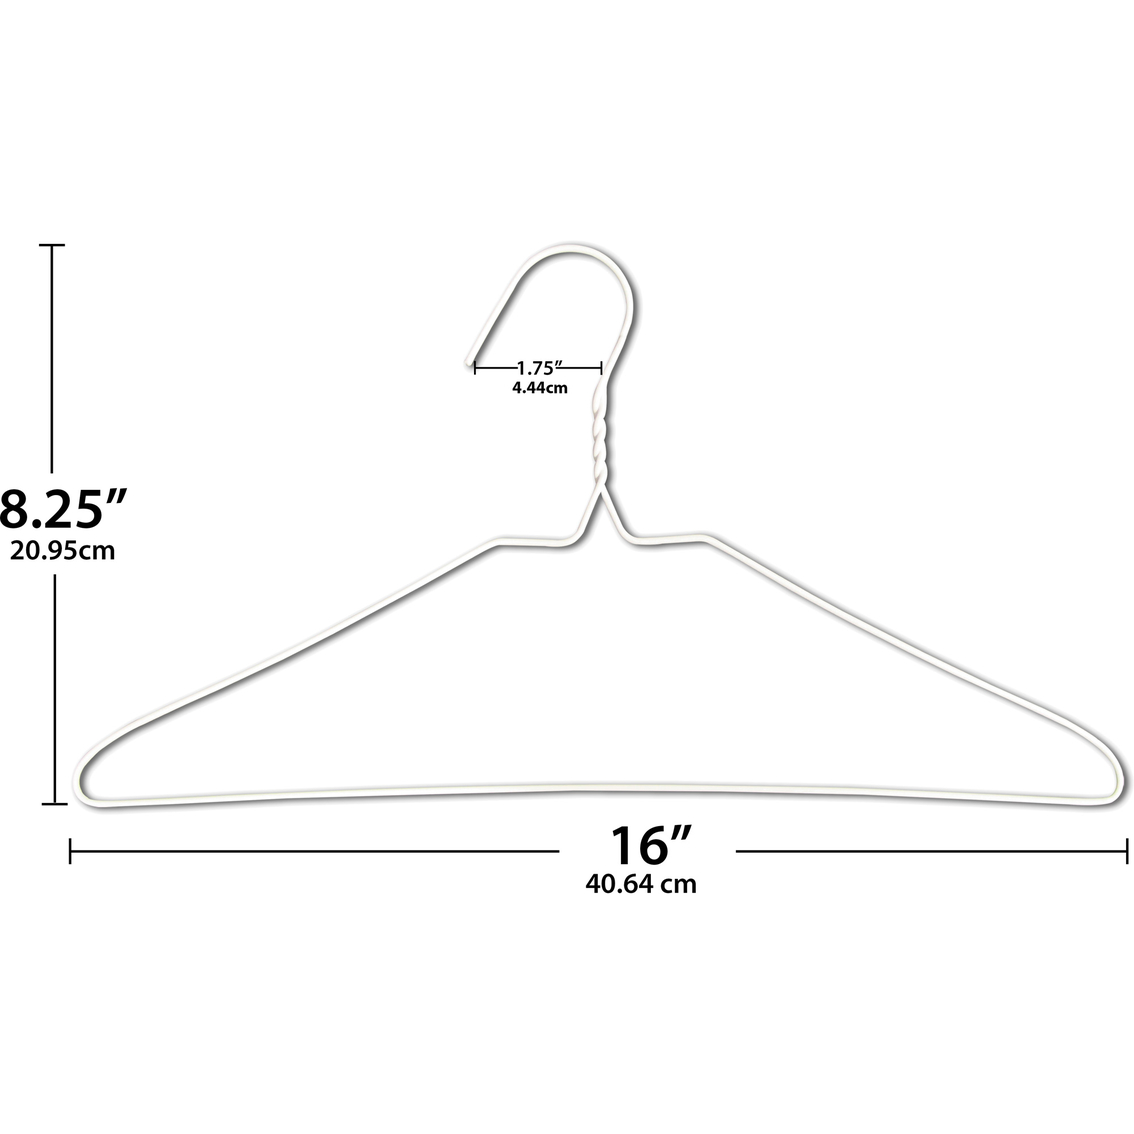 Merrick Drip Dry Hangers 10 Pk. - Image 3 of 3